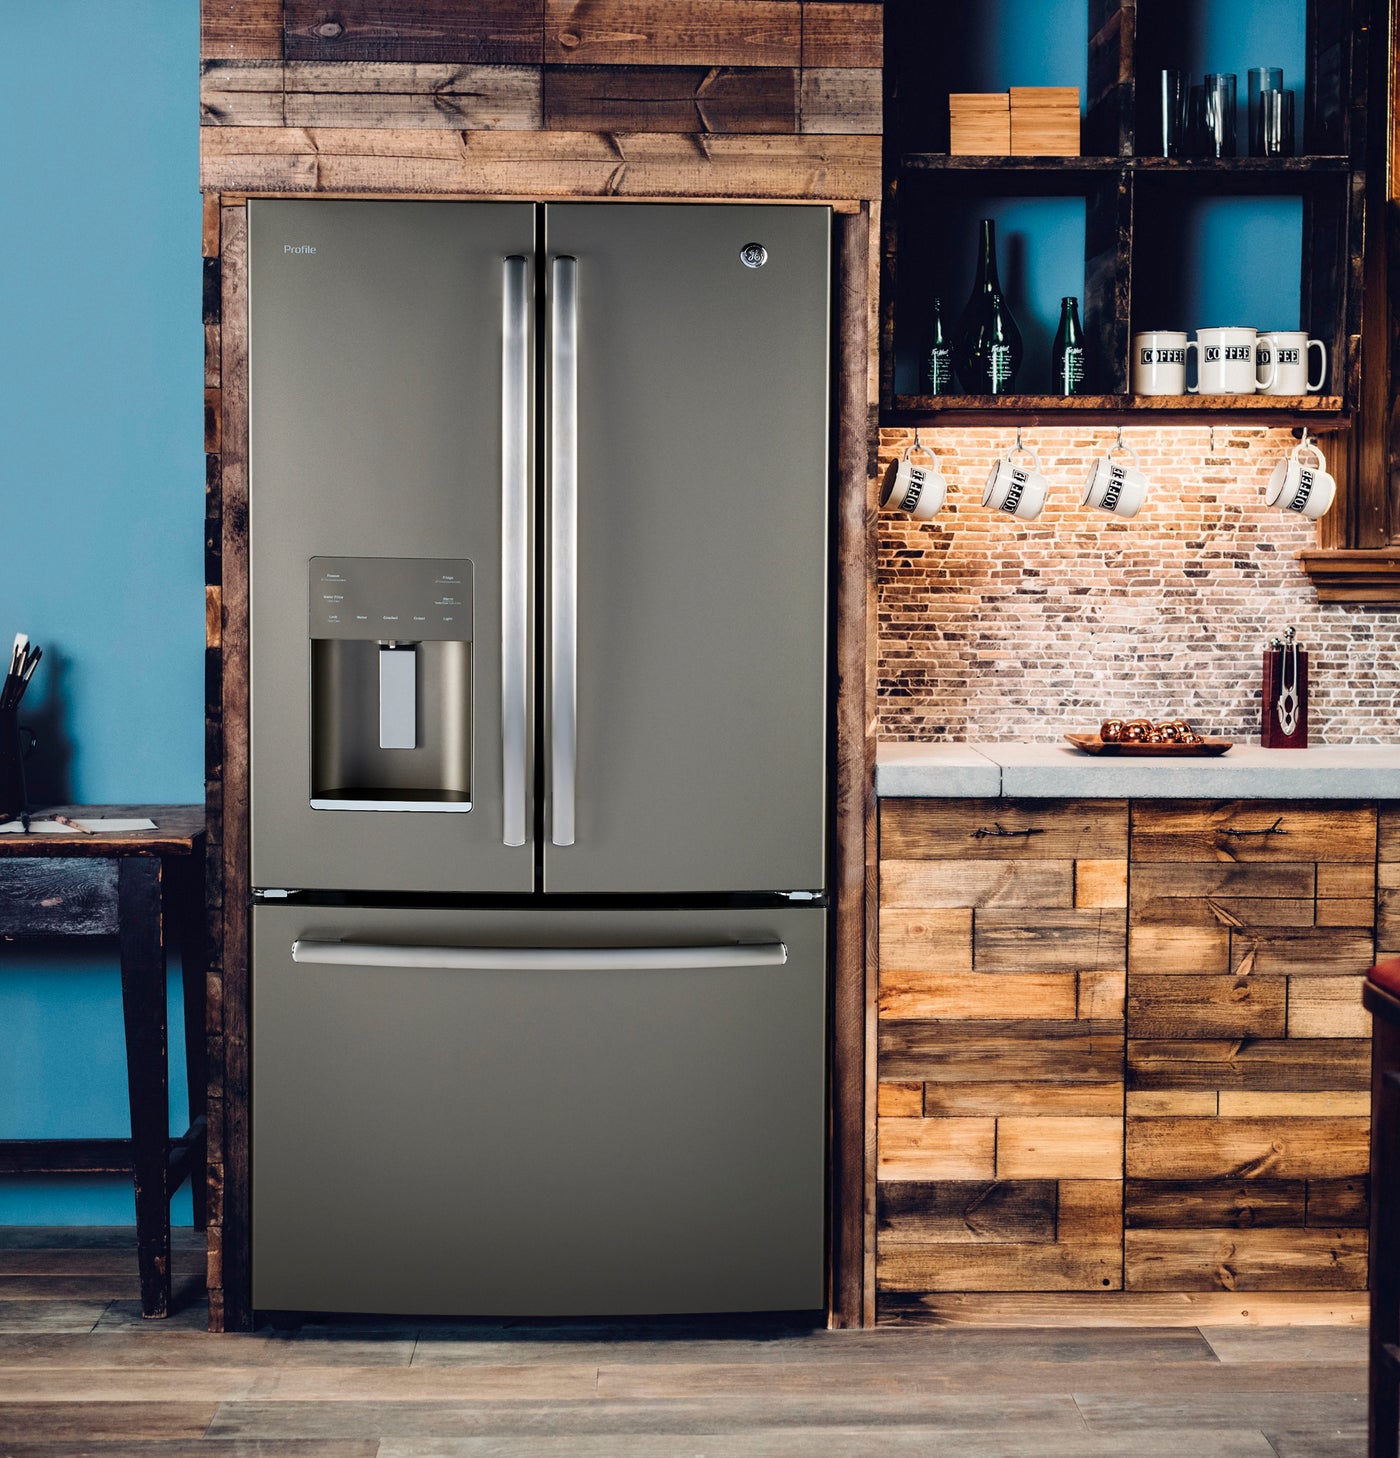 GE Profile Slate French Door Refrigerator (17.5 Cu. Ft.) - PYE18HMLKES